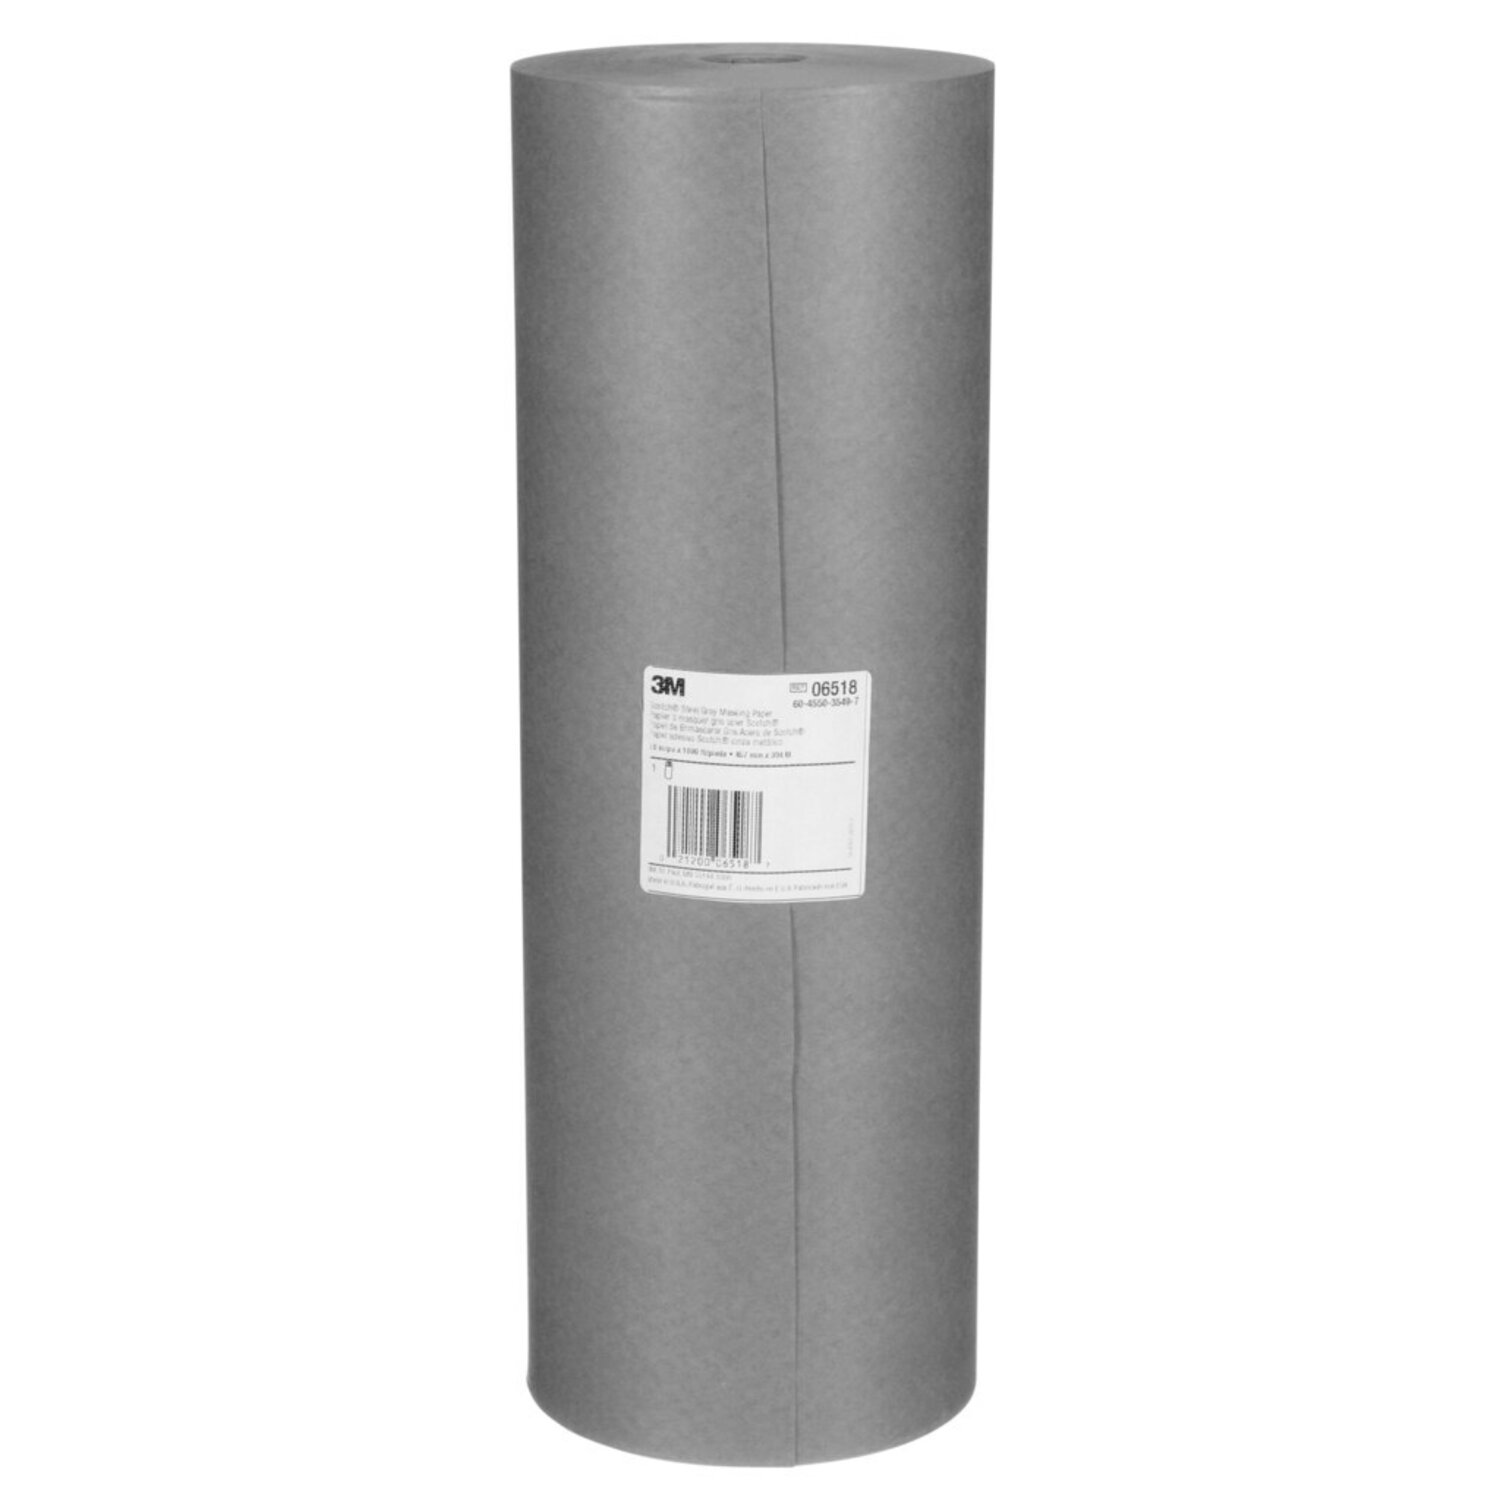 7000045441 - Scotch Steel Gray Masking Paper, 06518, 18 in x 1000 ft, 2 per case